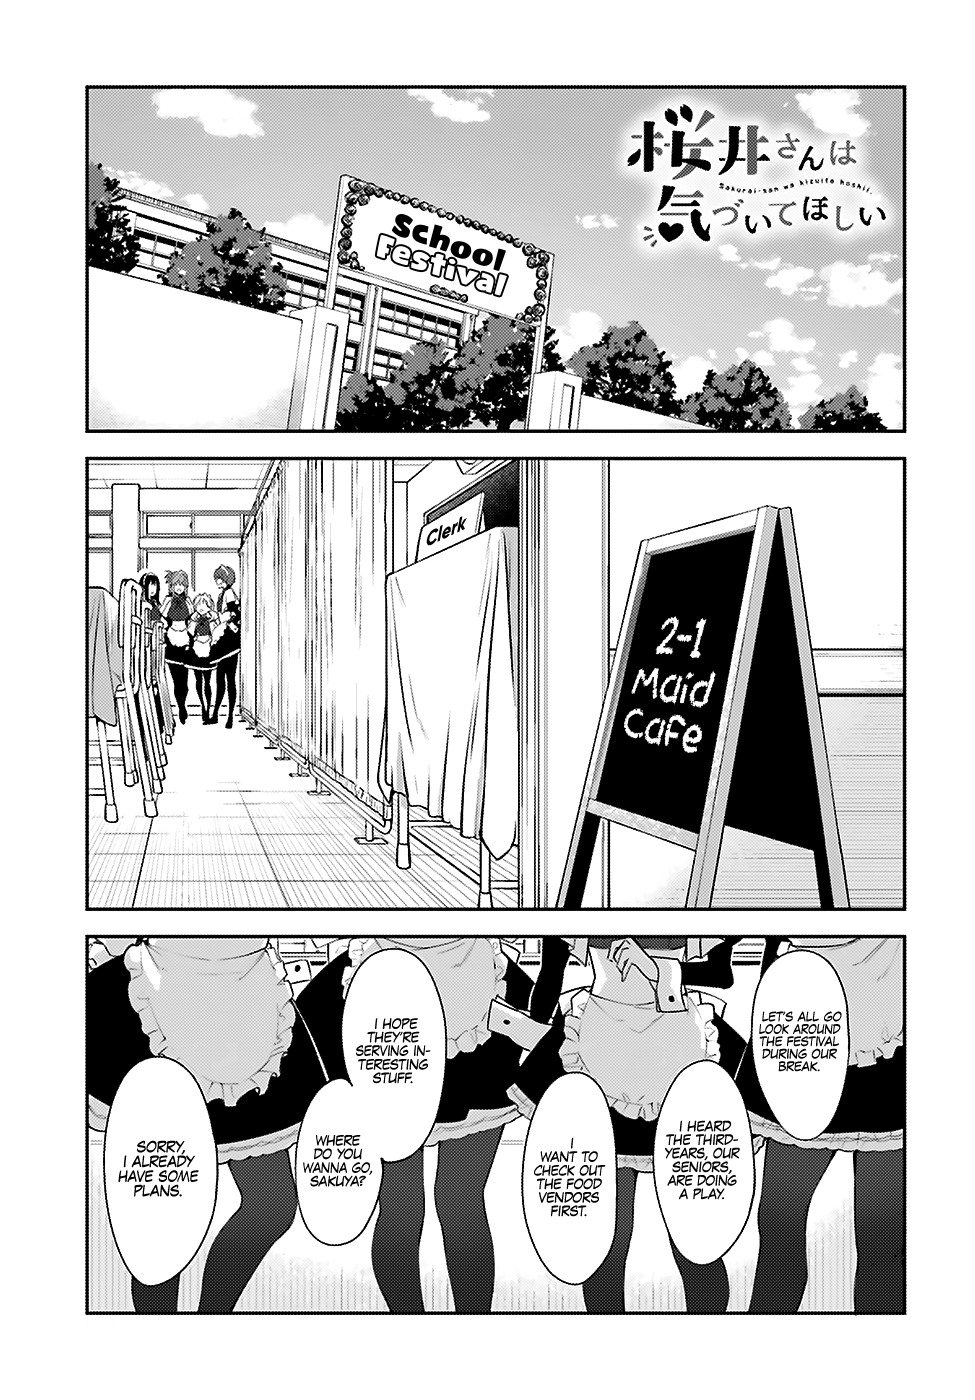 Sakurai-San Wants To Be Noticed - Page 2